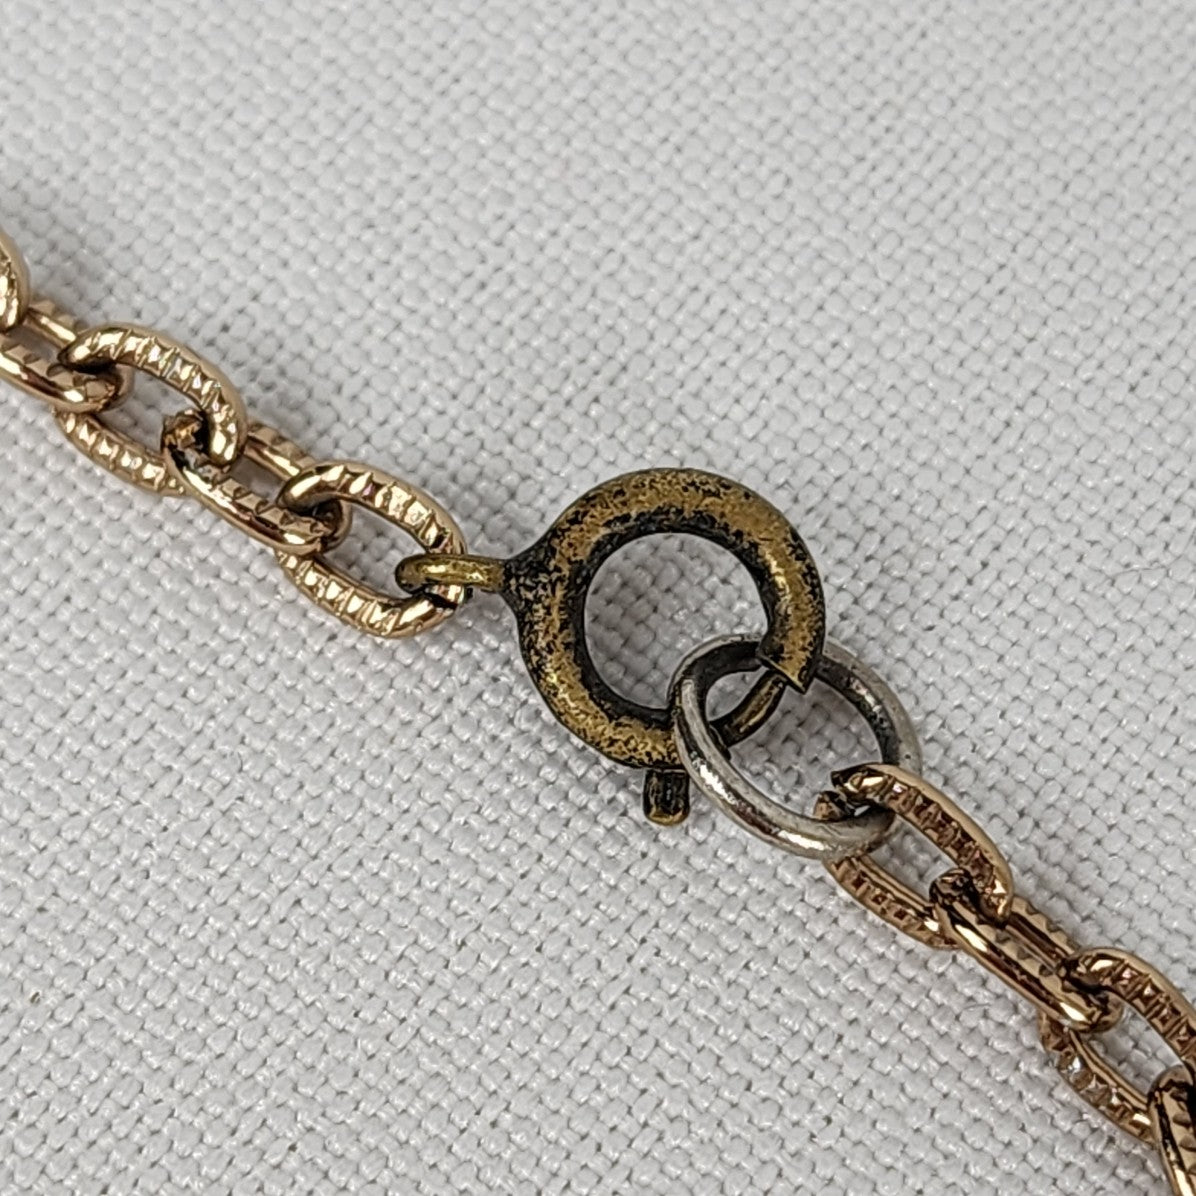 Vintage Brown & Gold Pendant Chain Necklace